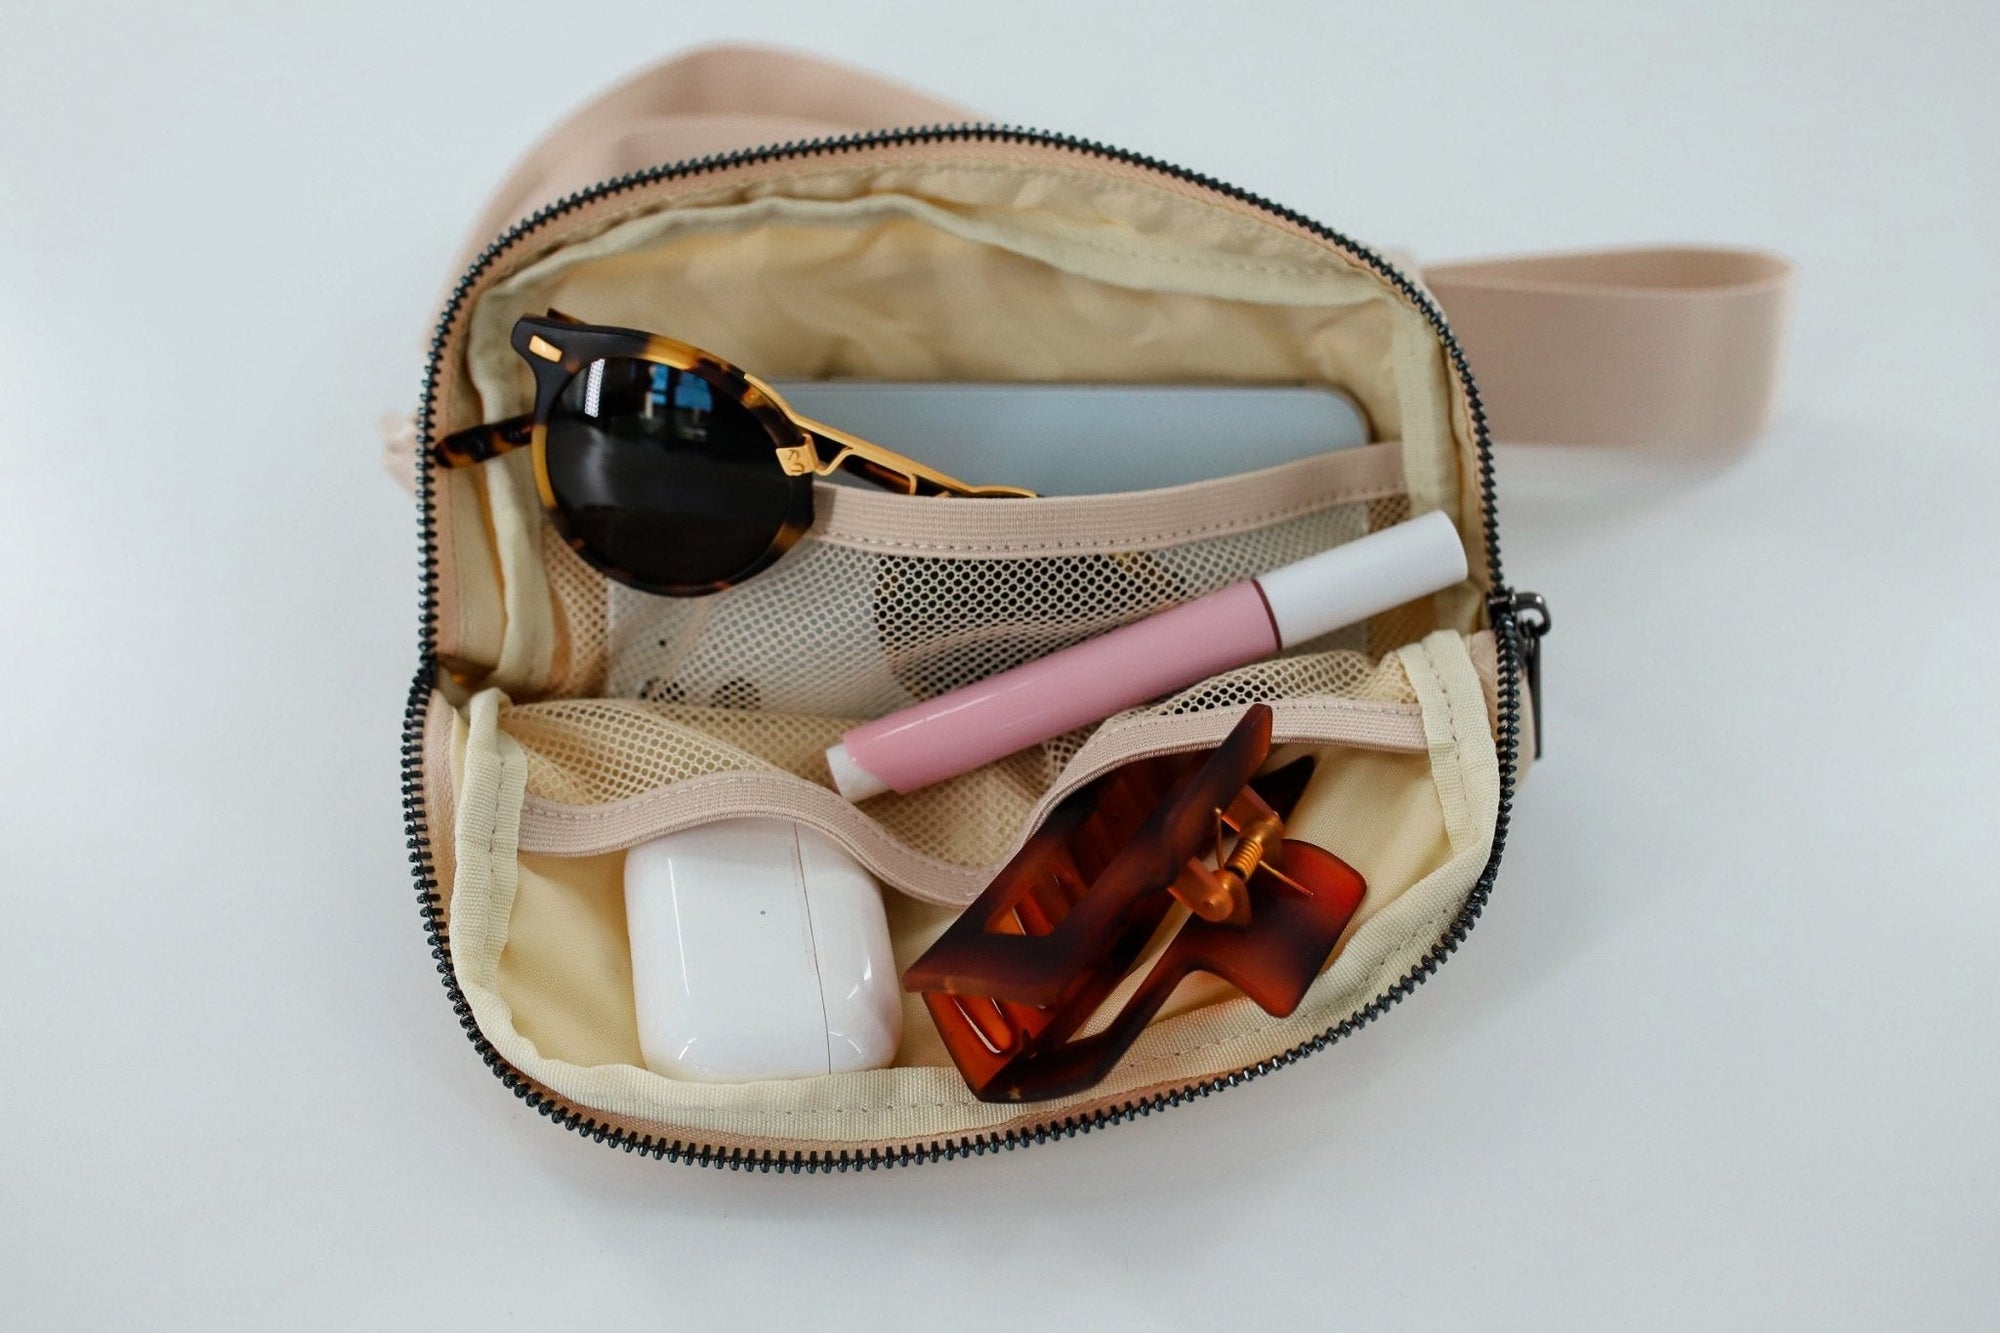 Embroidered Belt Bag, Middle - Sprinkled With Pink #bachelorette #custom #gifts